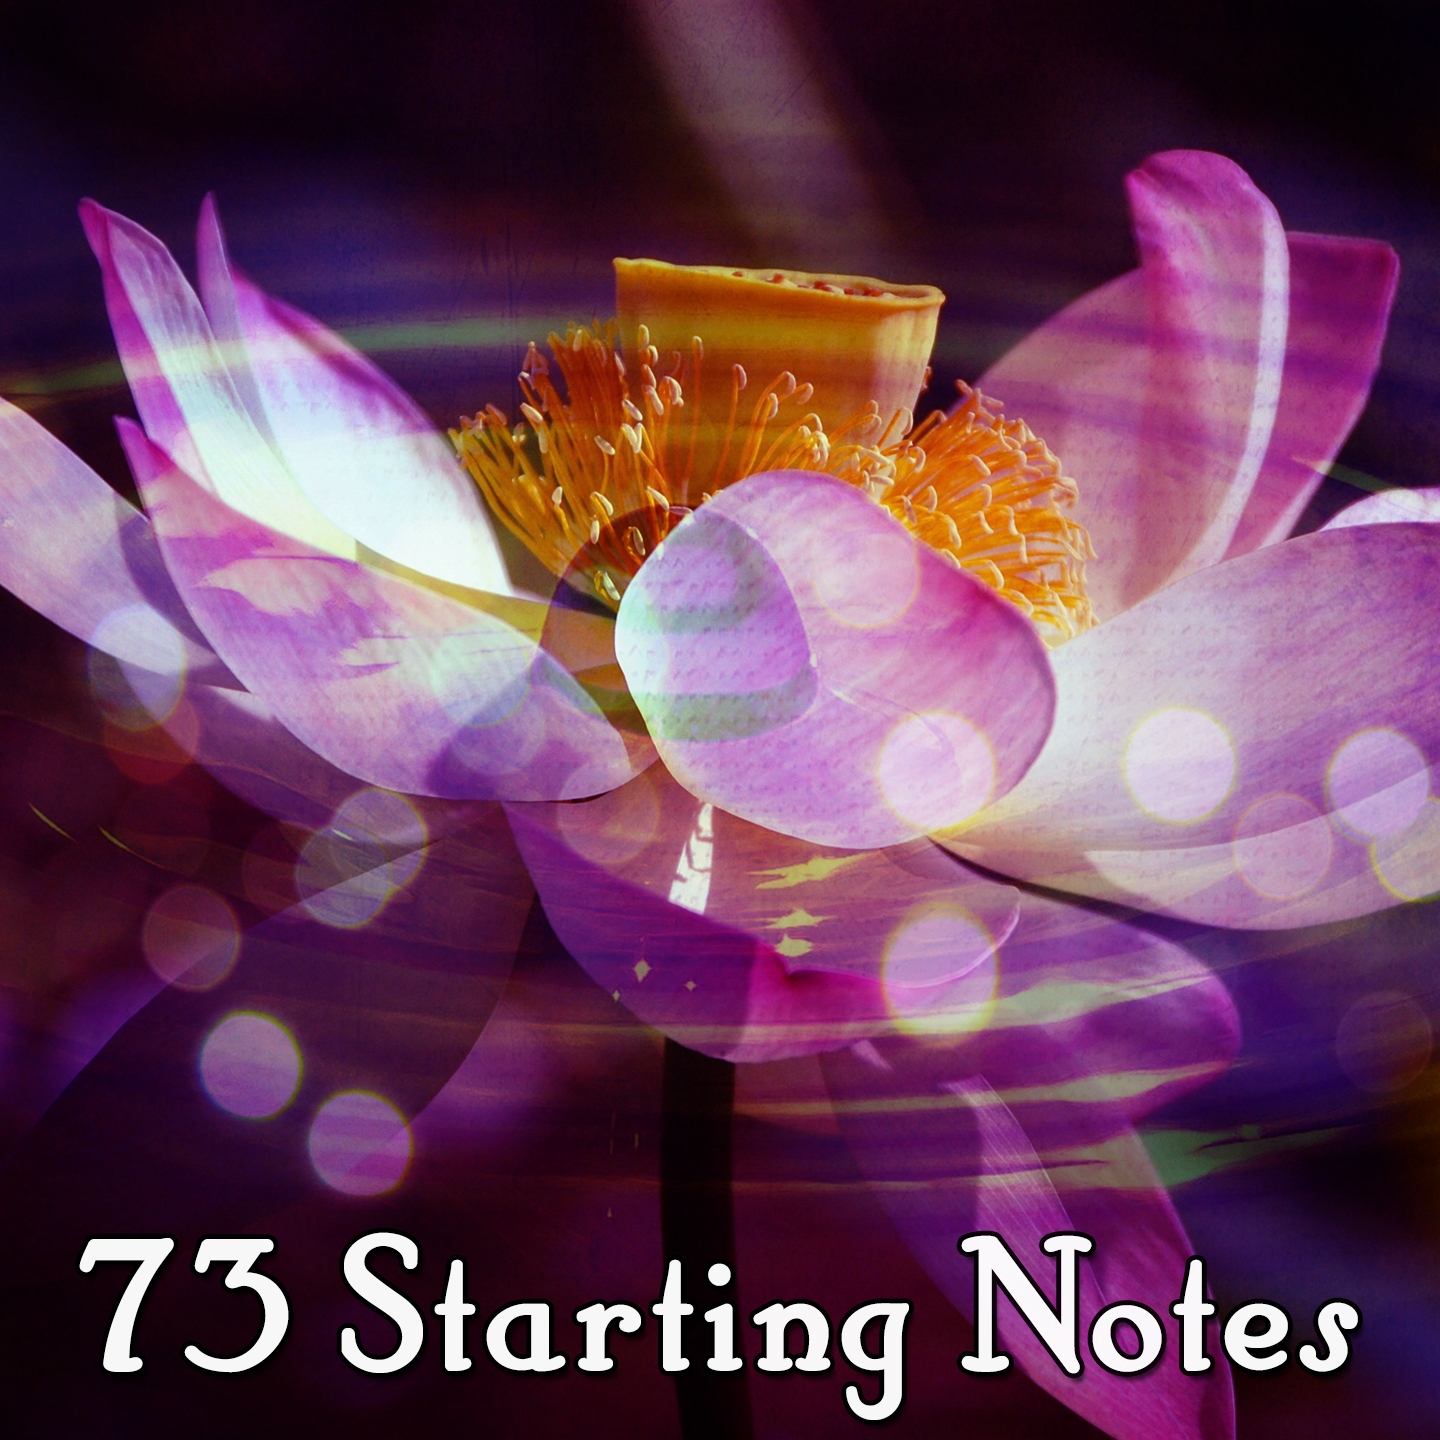 73 Starting Notes